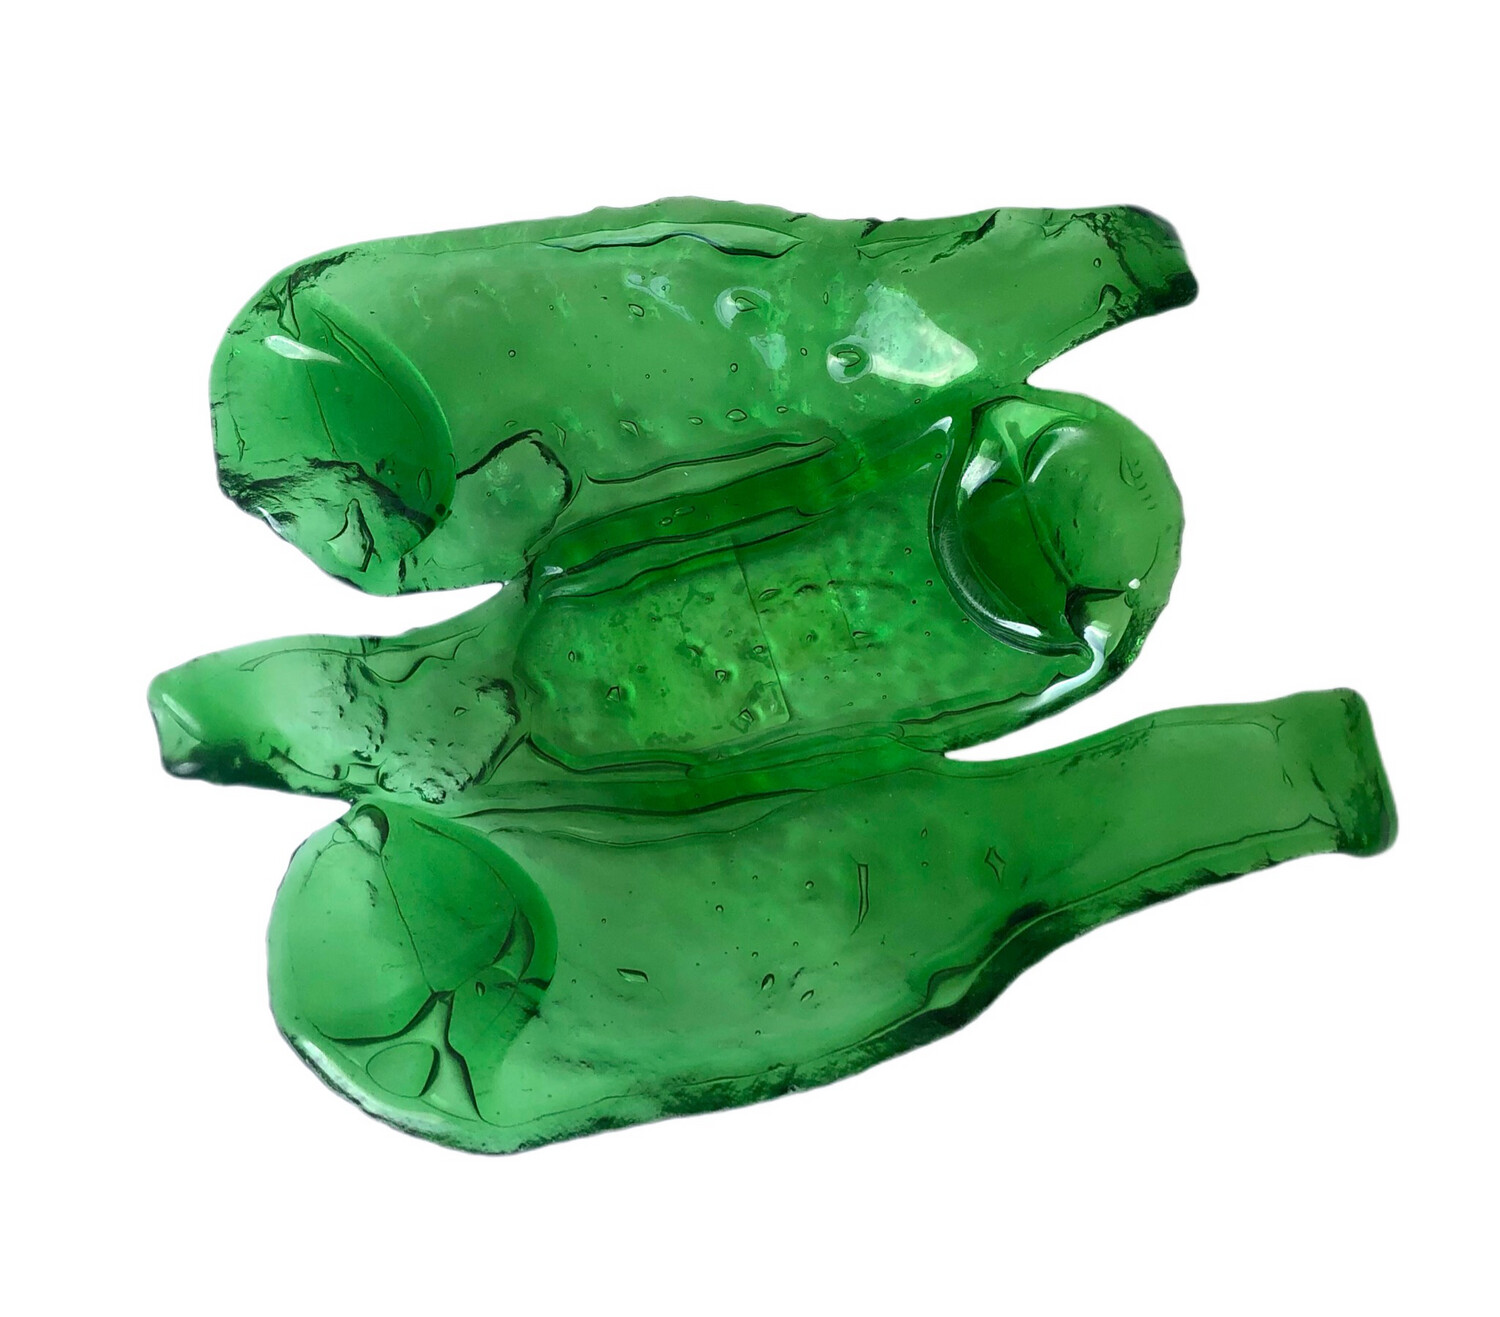 3 Green Bottles / ٣ زجاجة خضراء